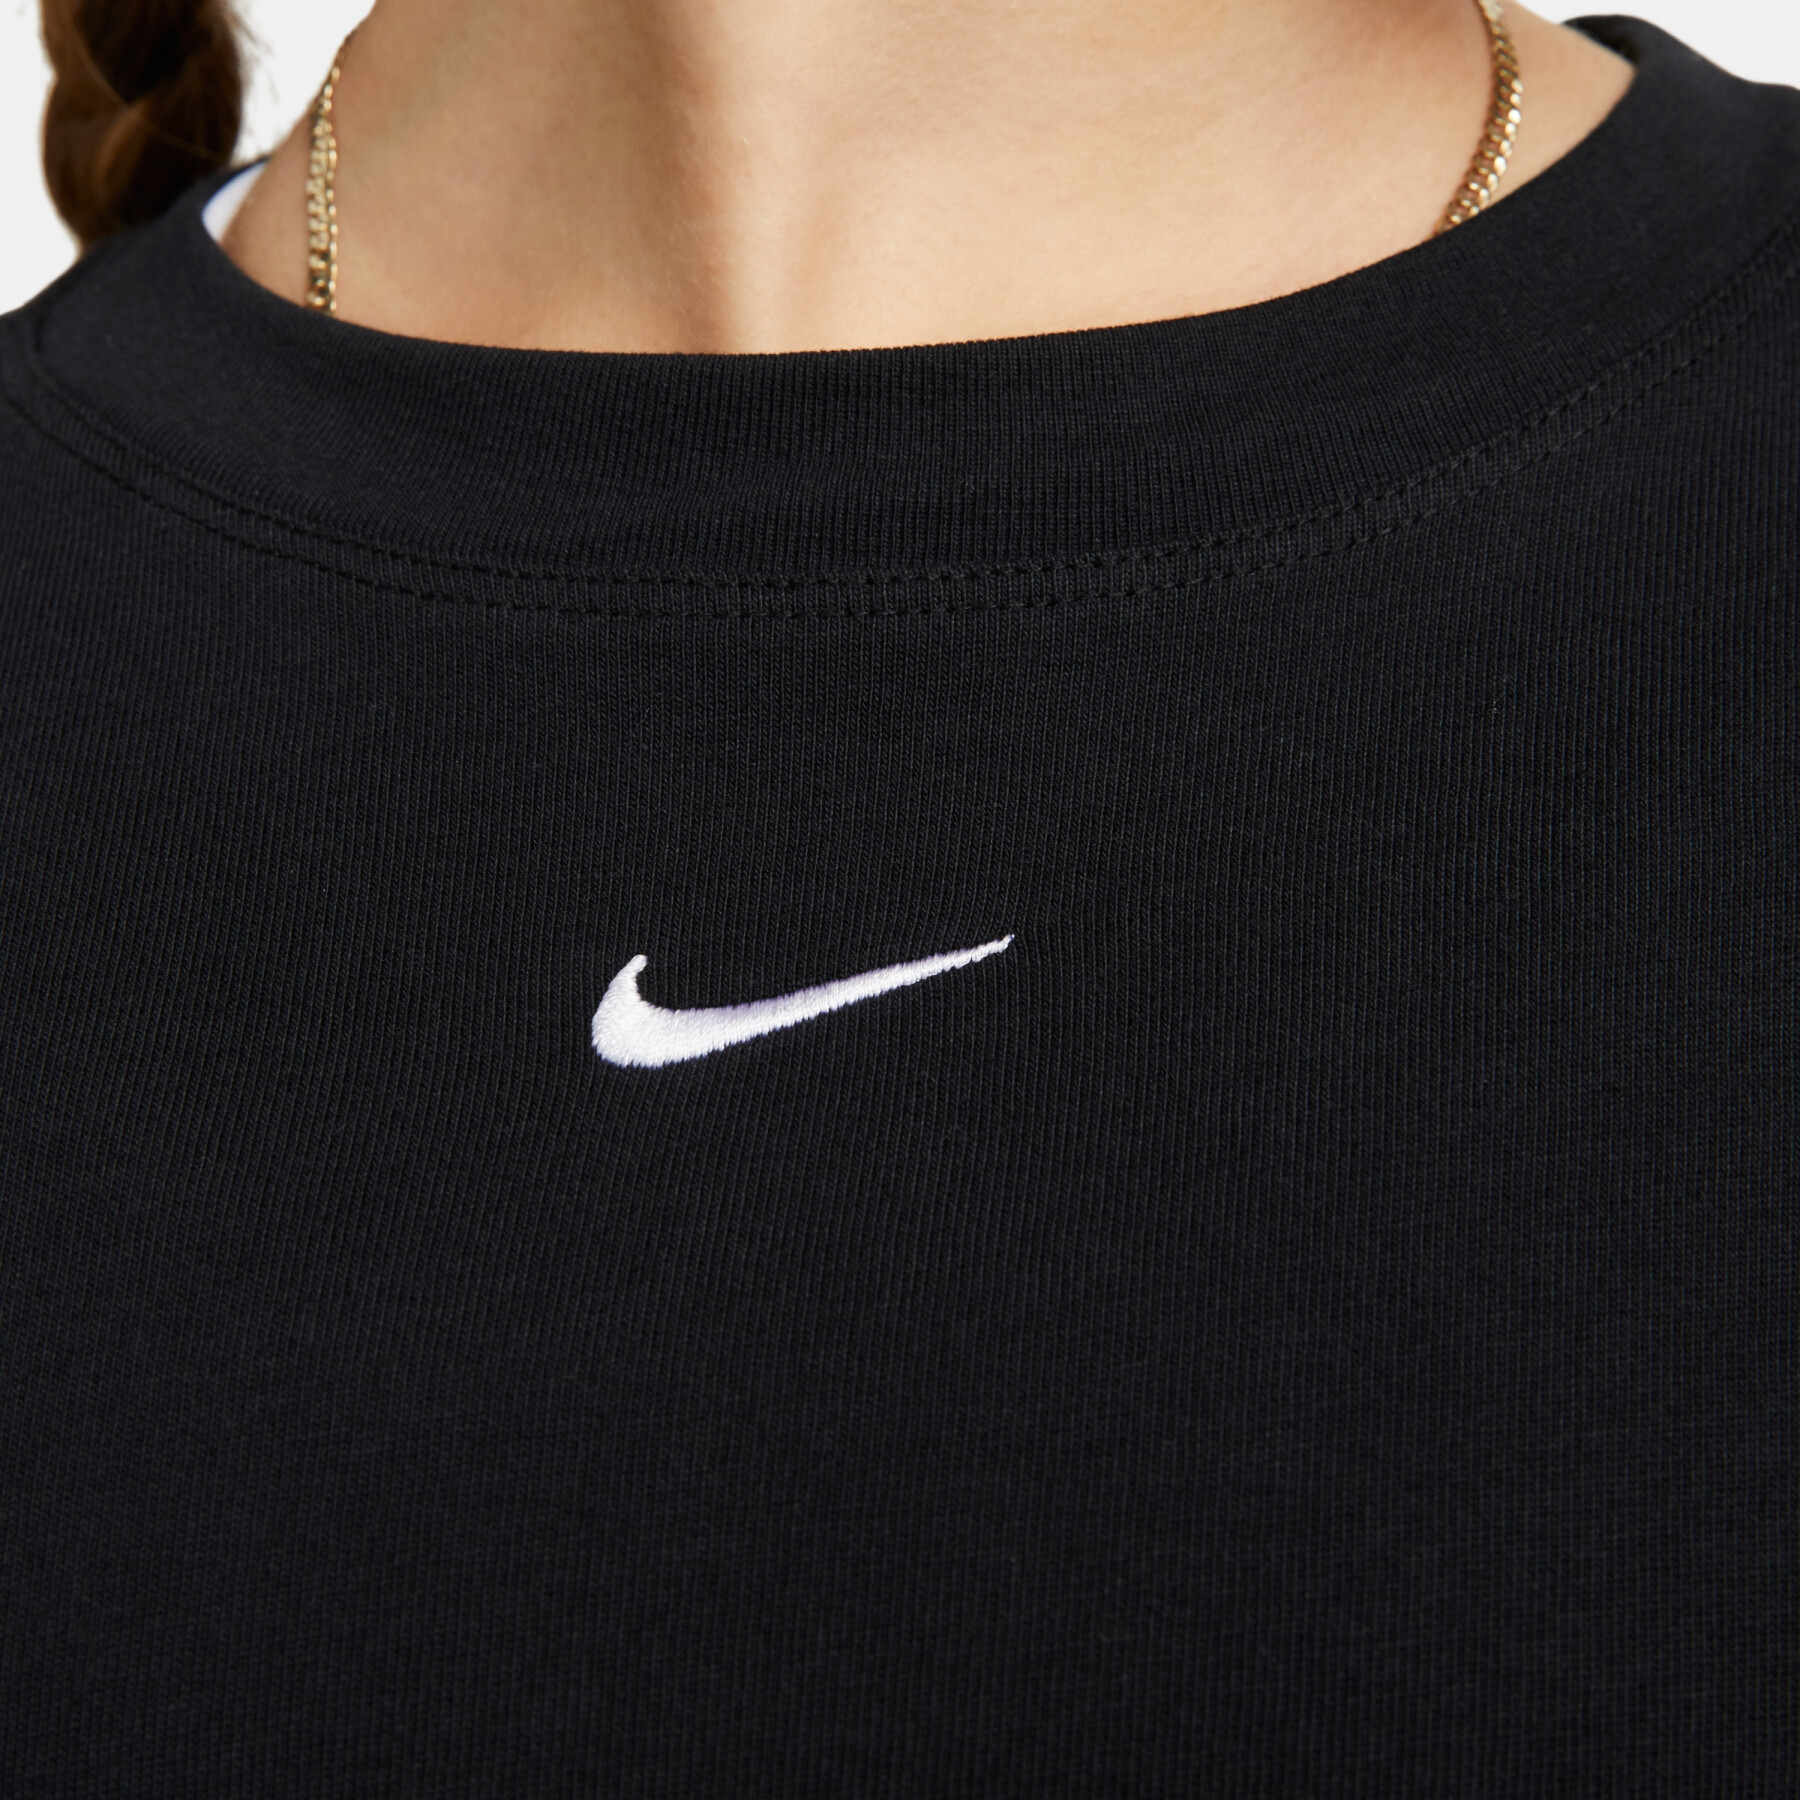 T-shirt oversize femme Nike Essential